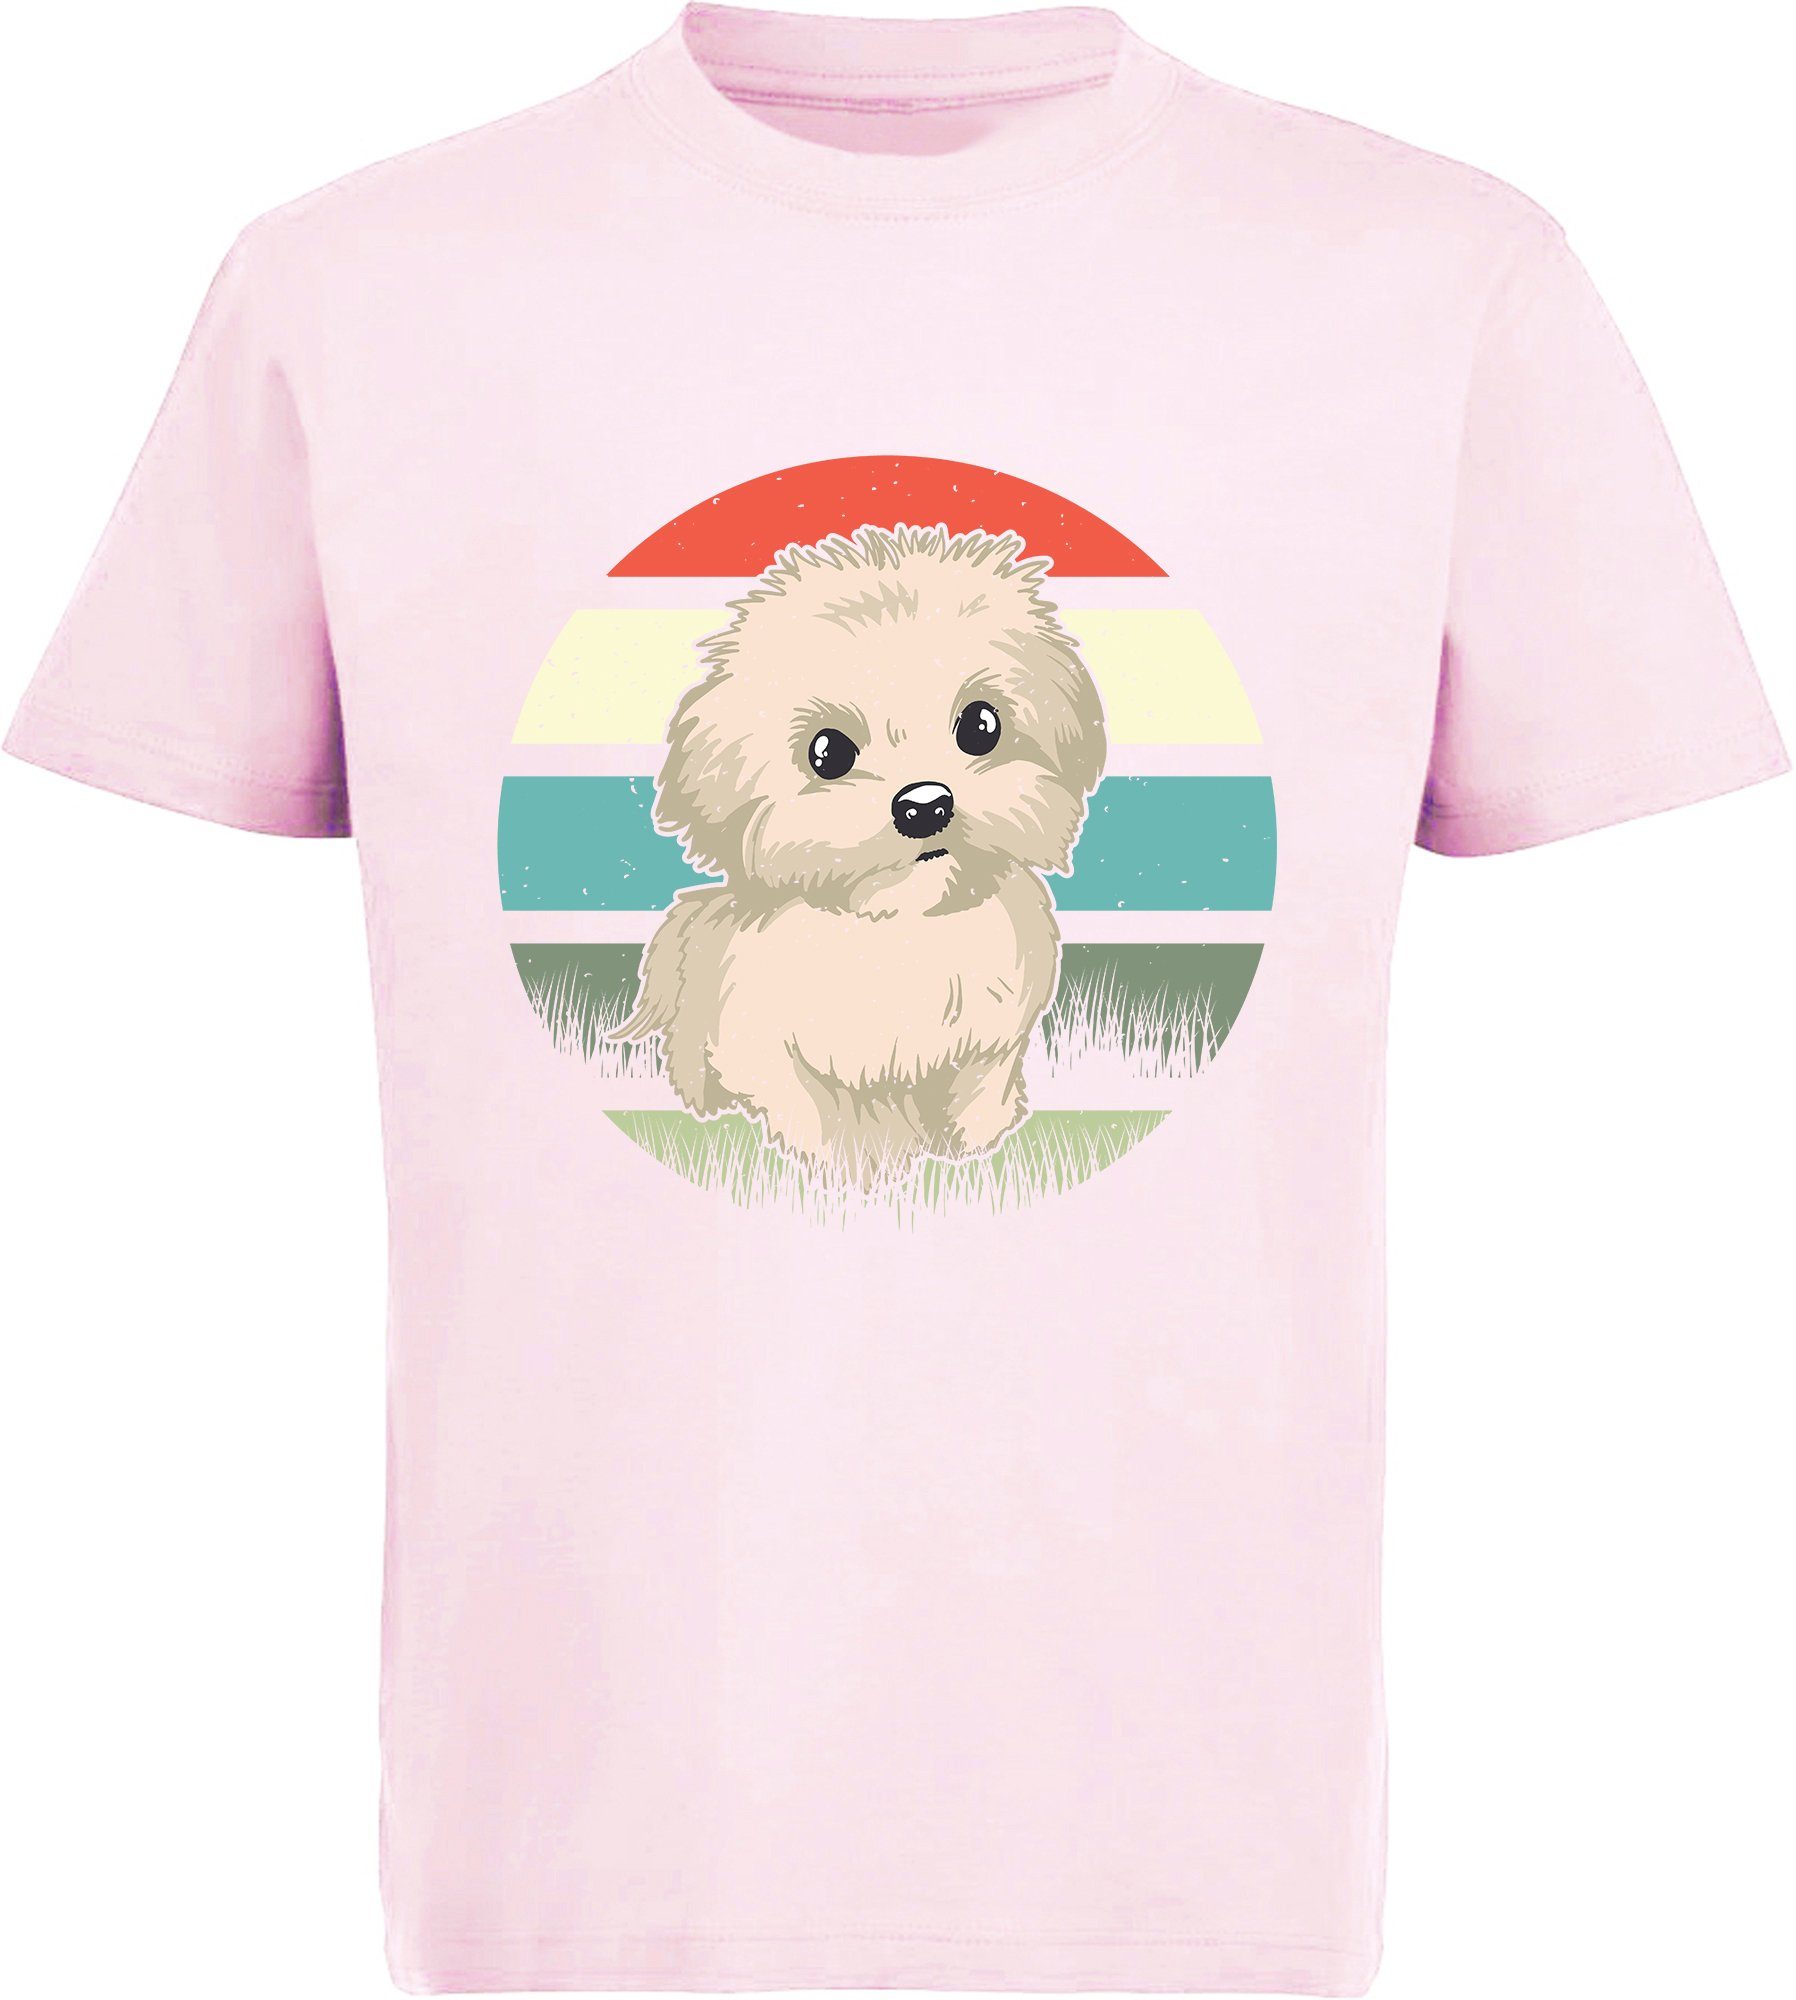 MyDesign24 Baumwollshirt - Welpen Kinder Retro bedruckt mit rosa Hunde Print-Shirt i242 Aufdruck, T-Shirt Malteser